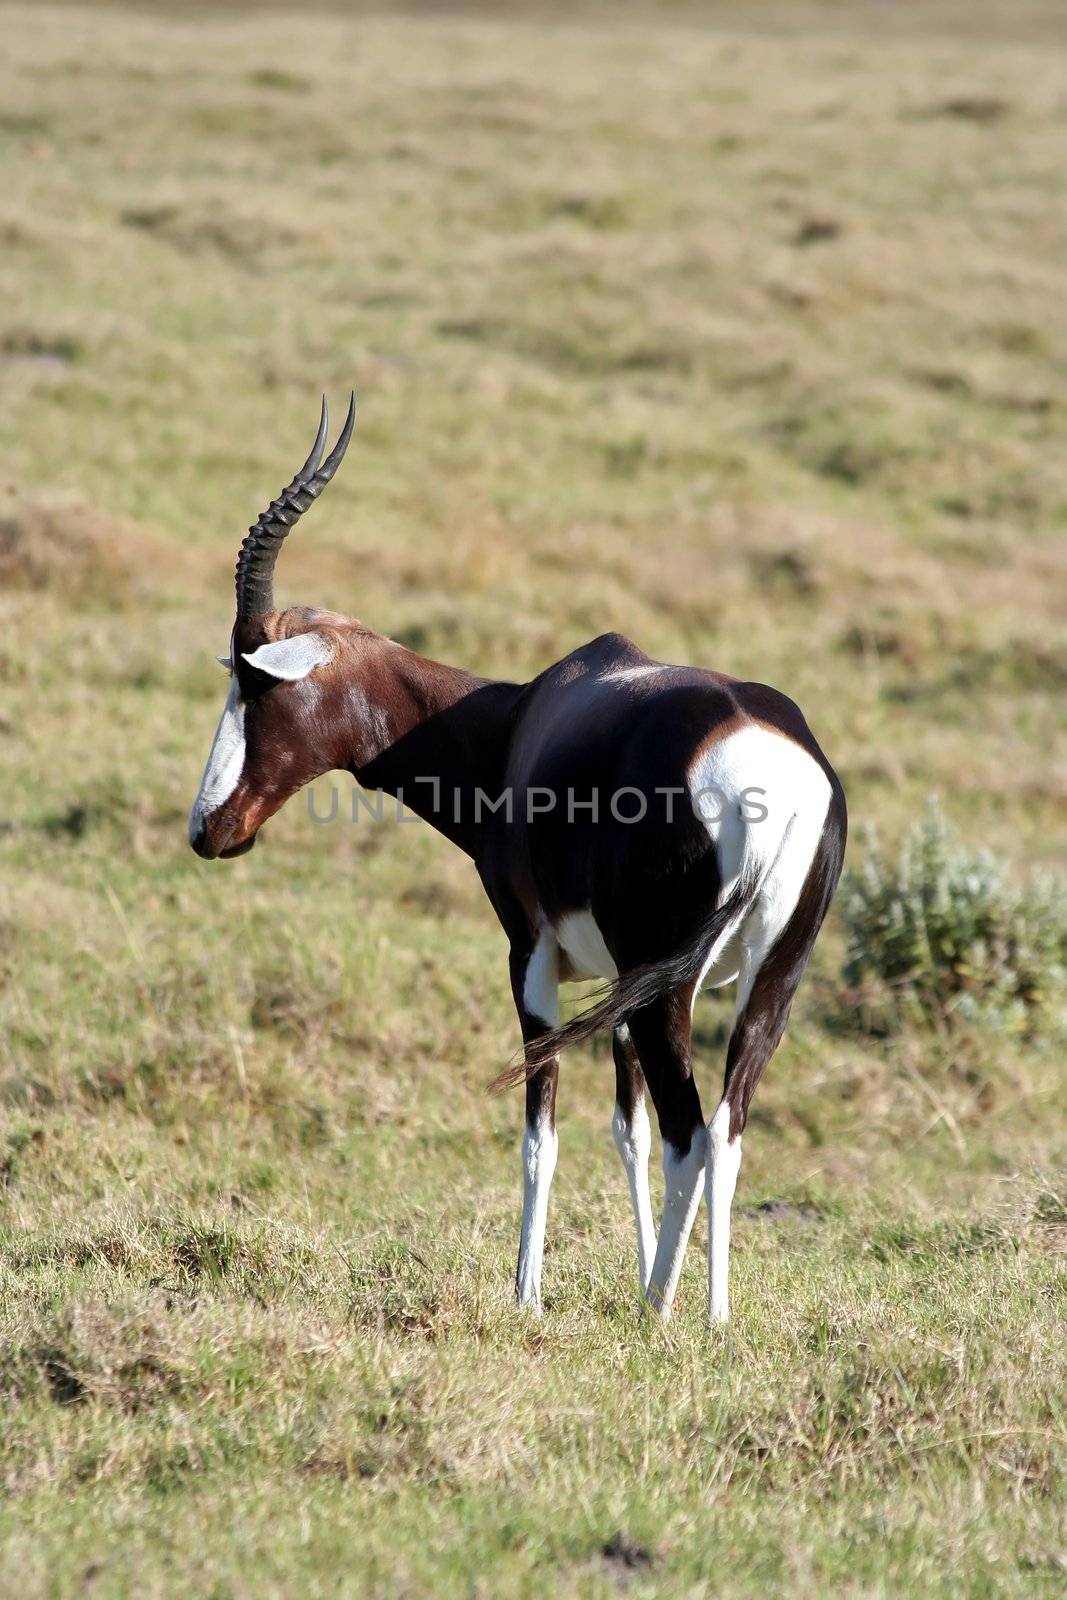 Striking Bontebok antelope on the African planes